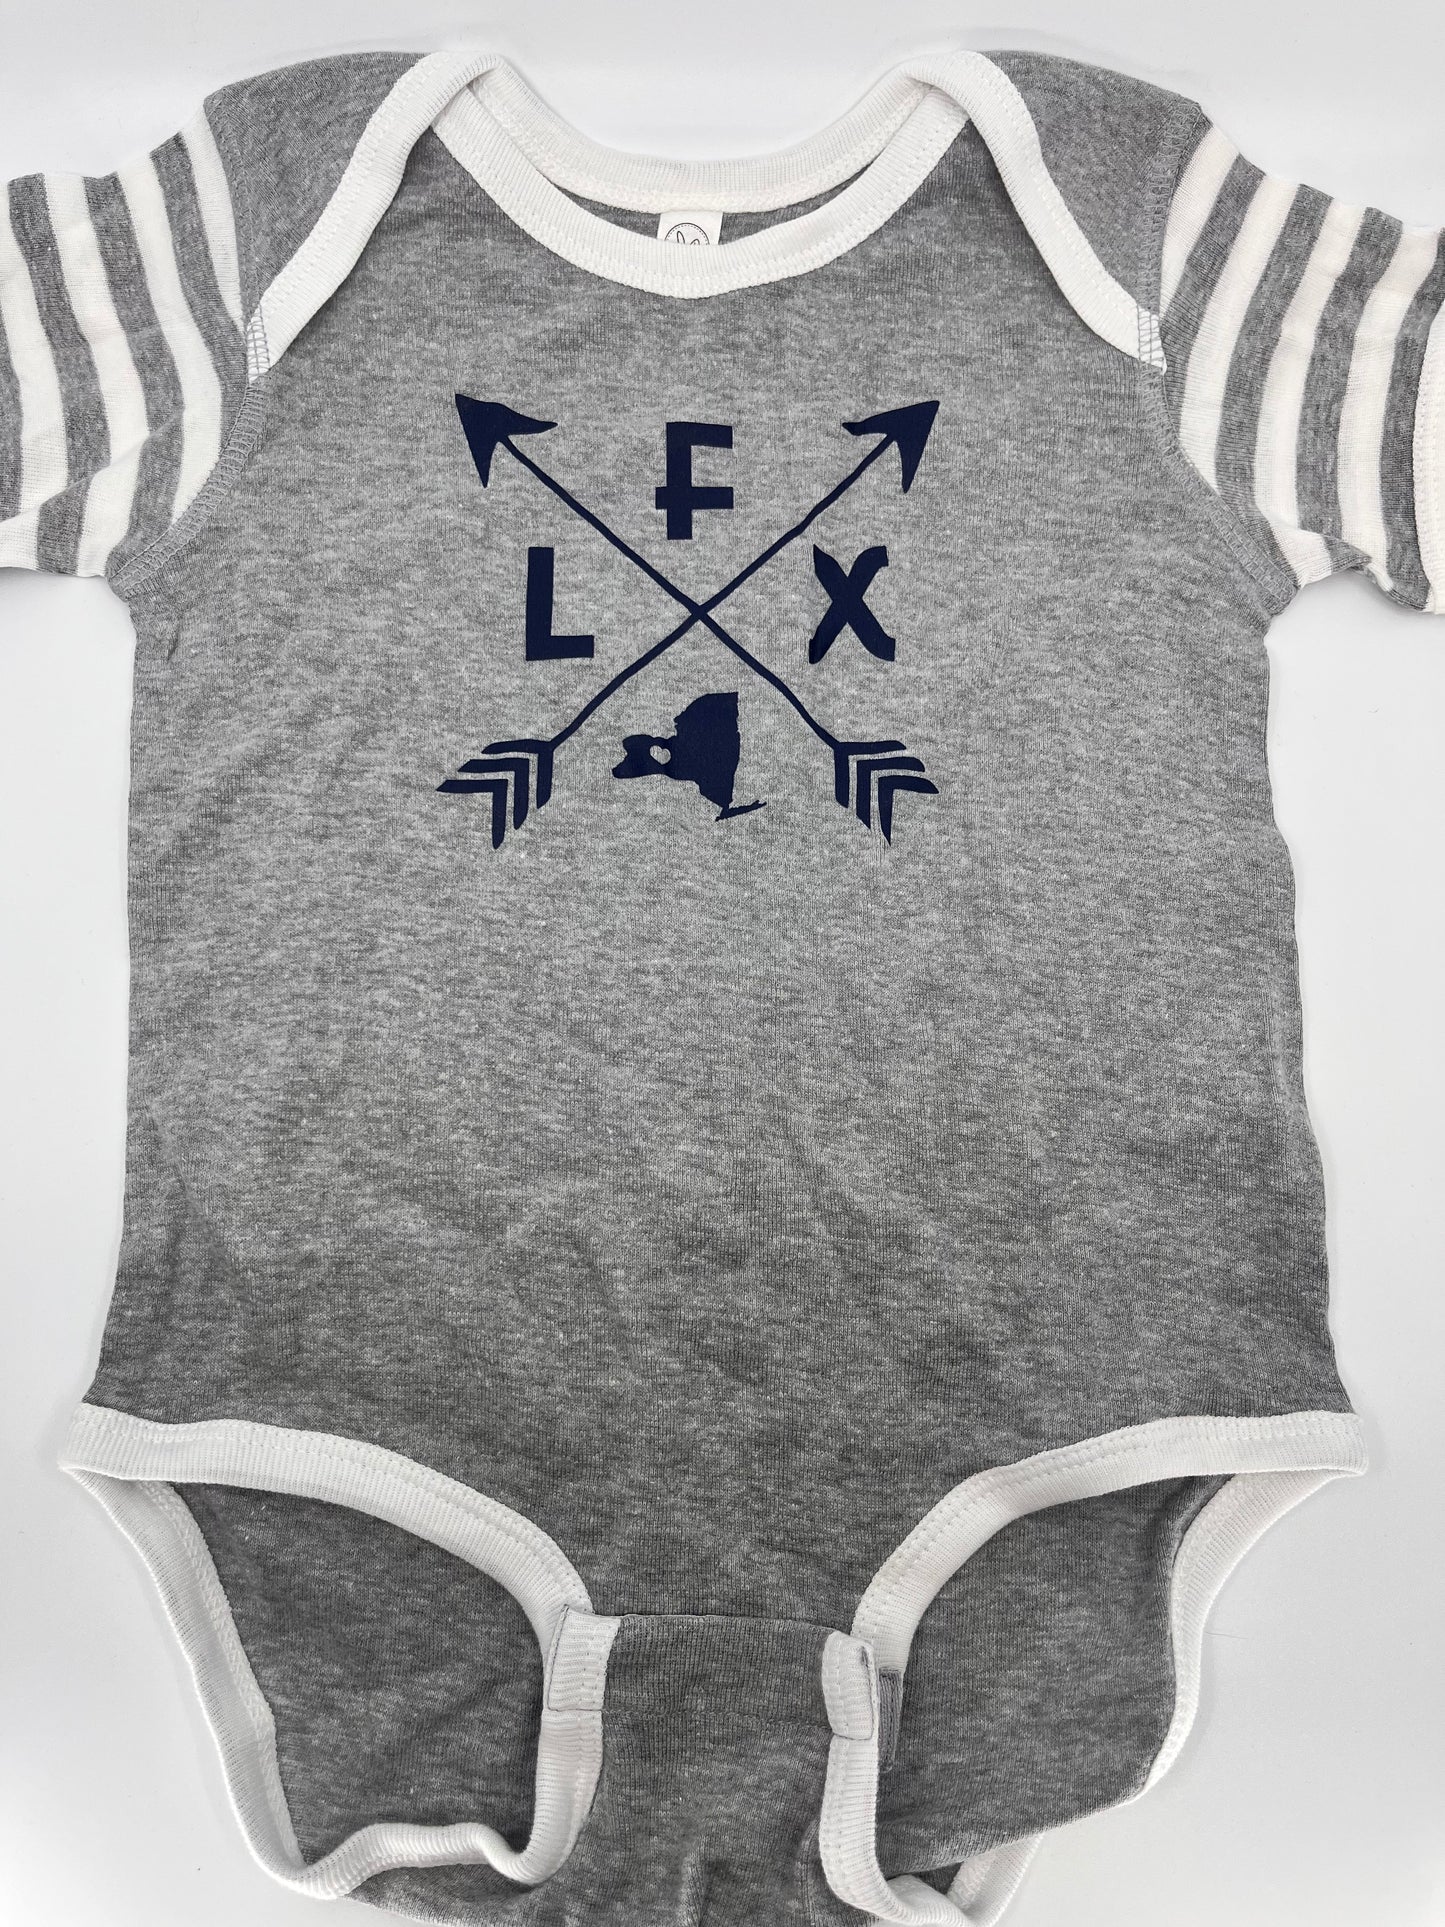 FLX baby body suit